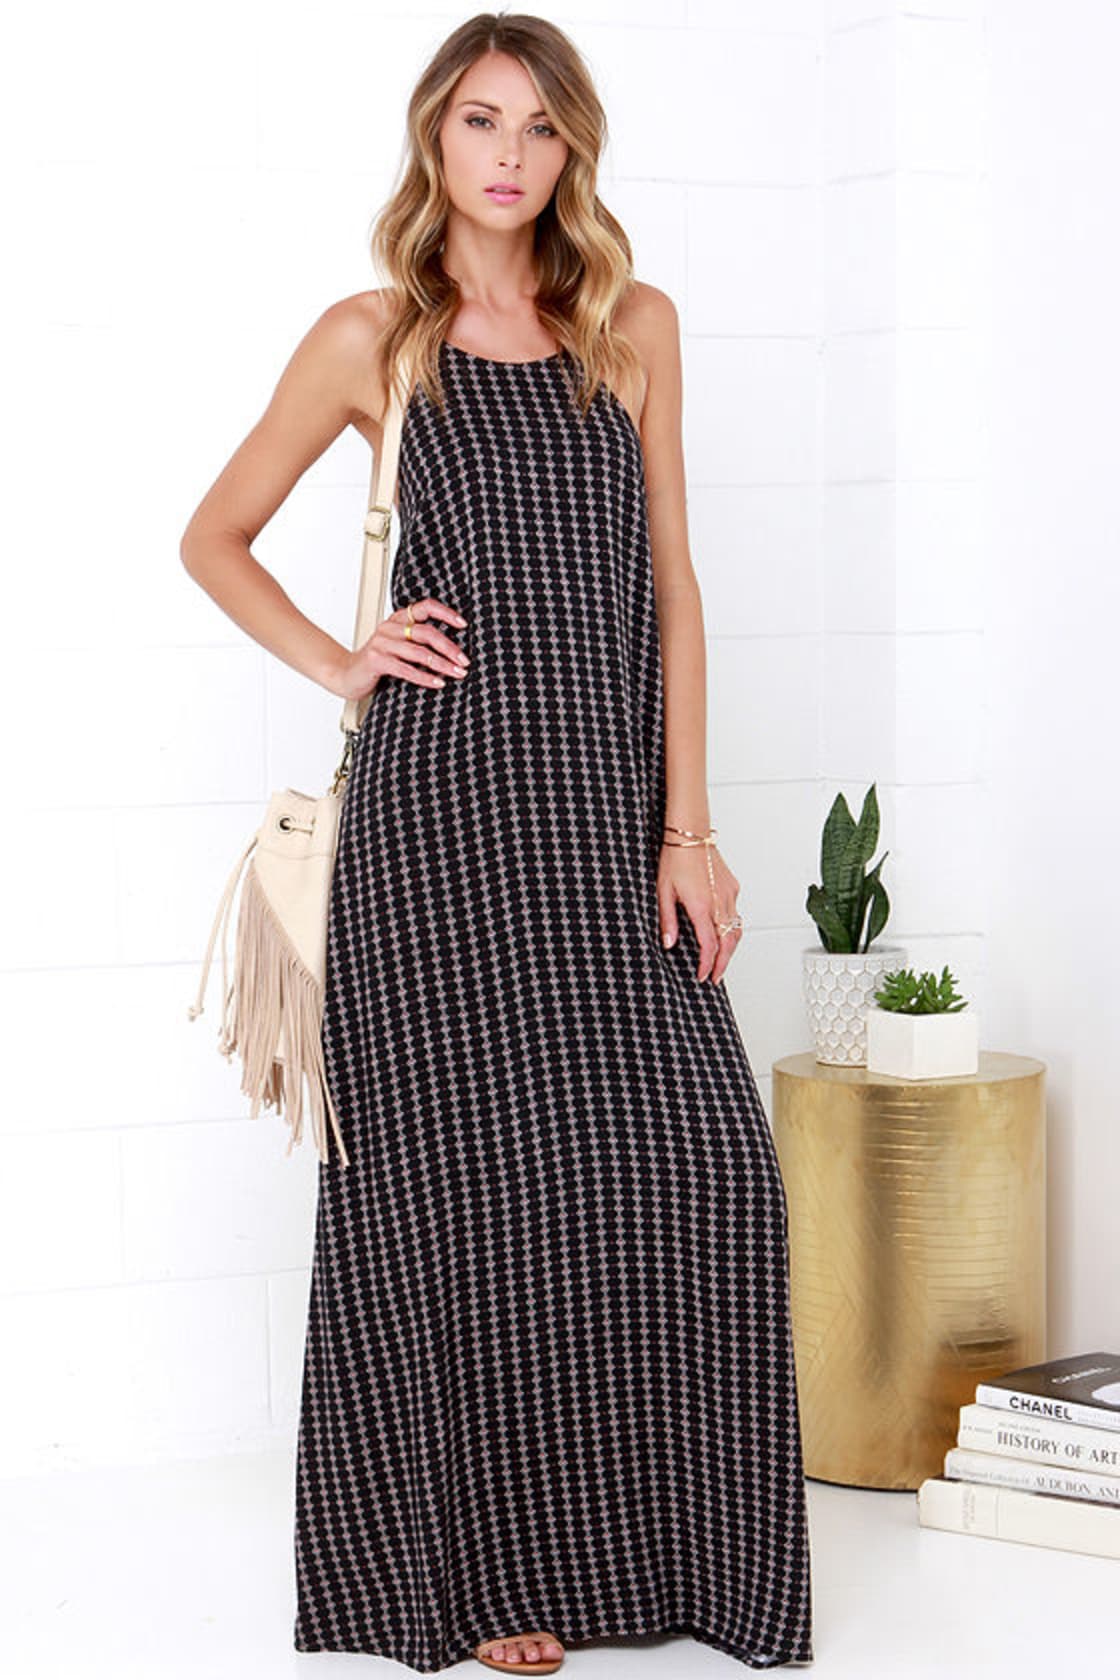 Boho Maxi Dress - Black Print Dress - Halter Maxi Dress - $48.00 - Lulus